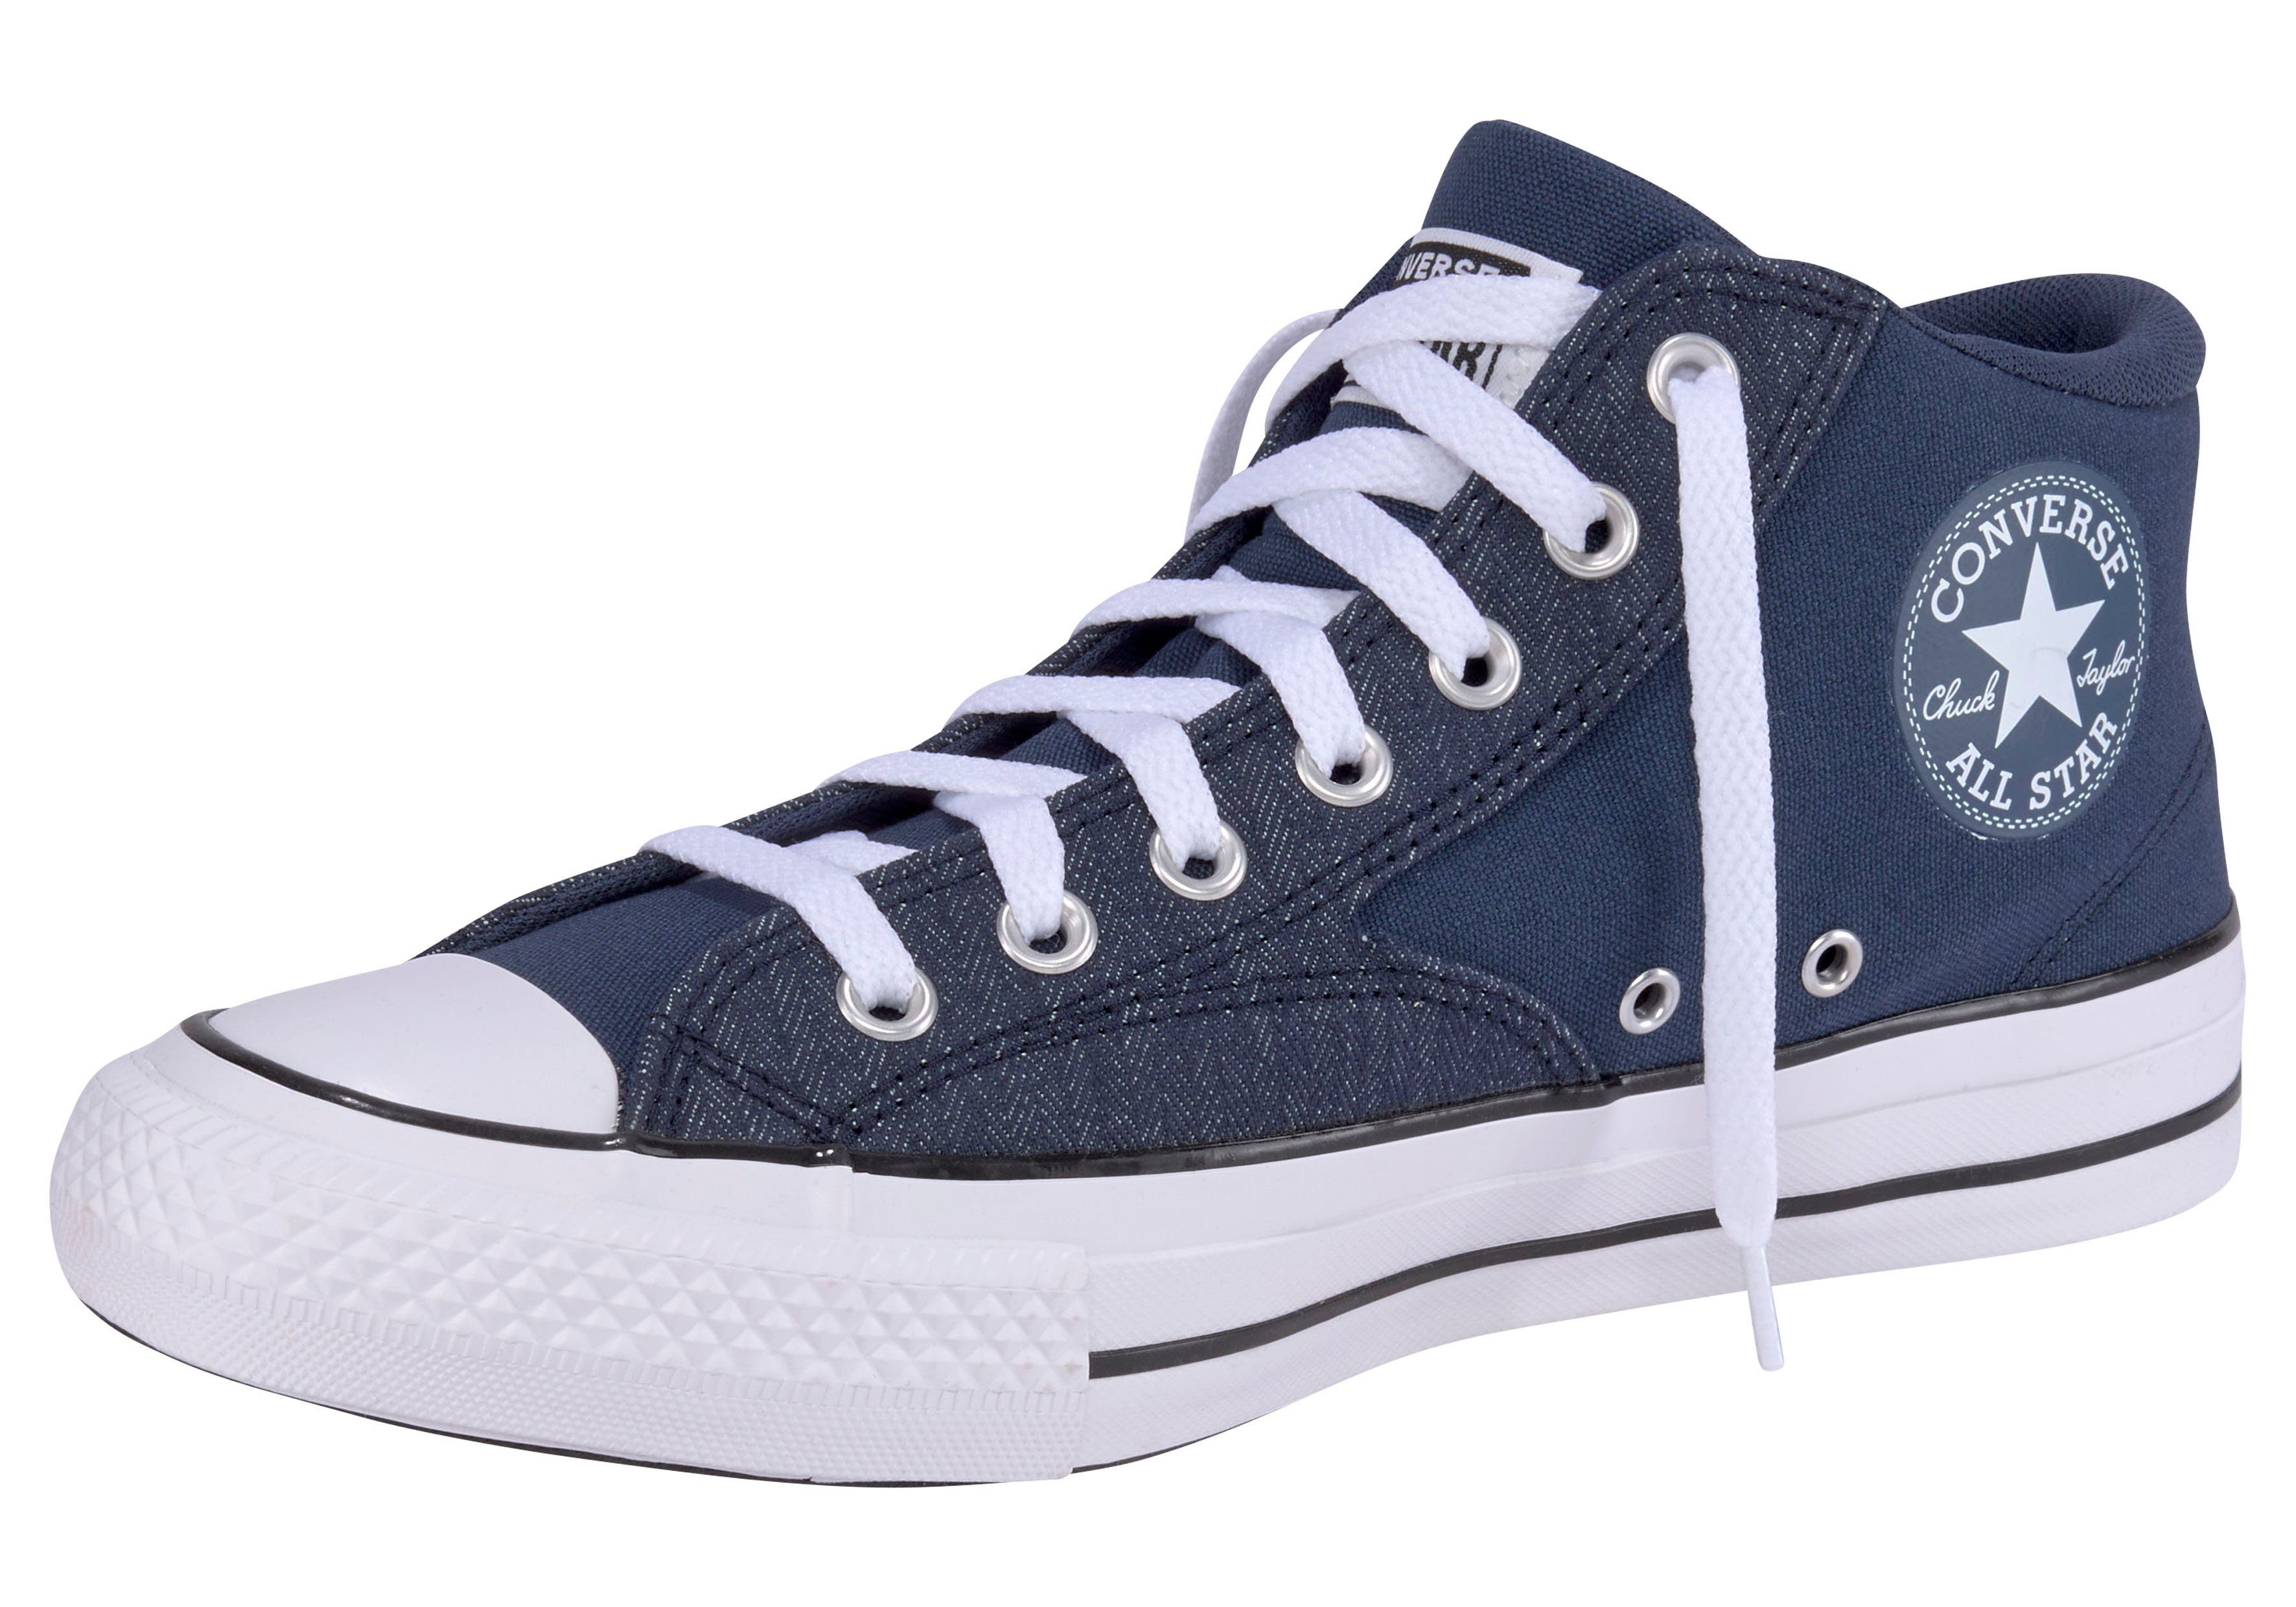 Erge, ernstige boeket demonstratie Converse Sneakers CHUCK TAYLOR ALL STAR MALDEN STREET online verkrijgbaar |  OTTO